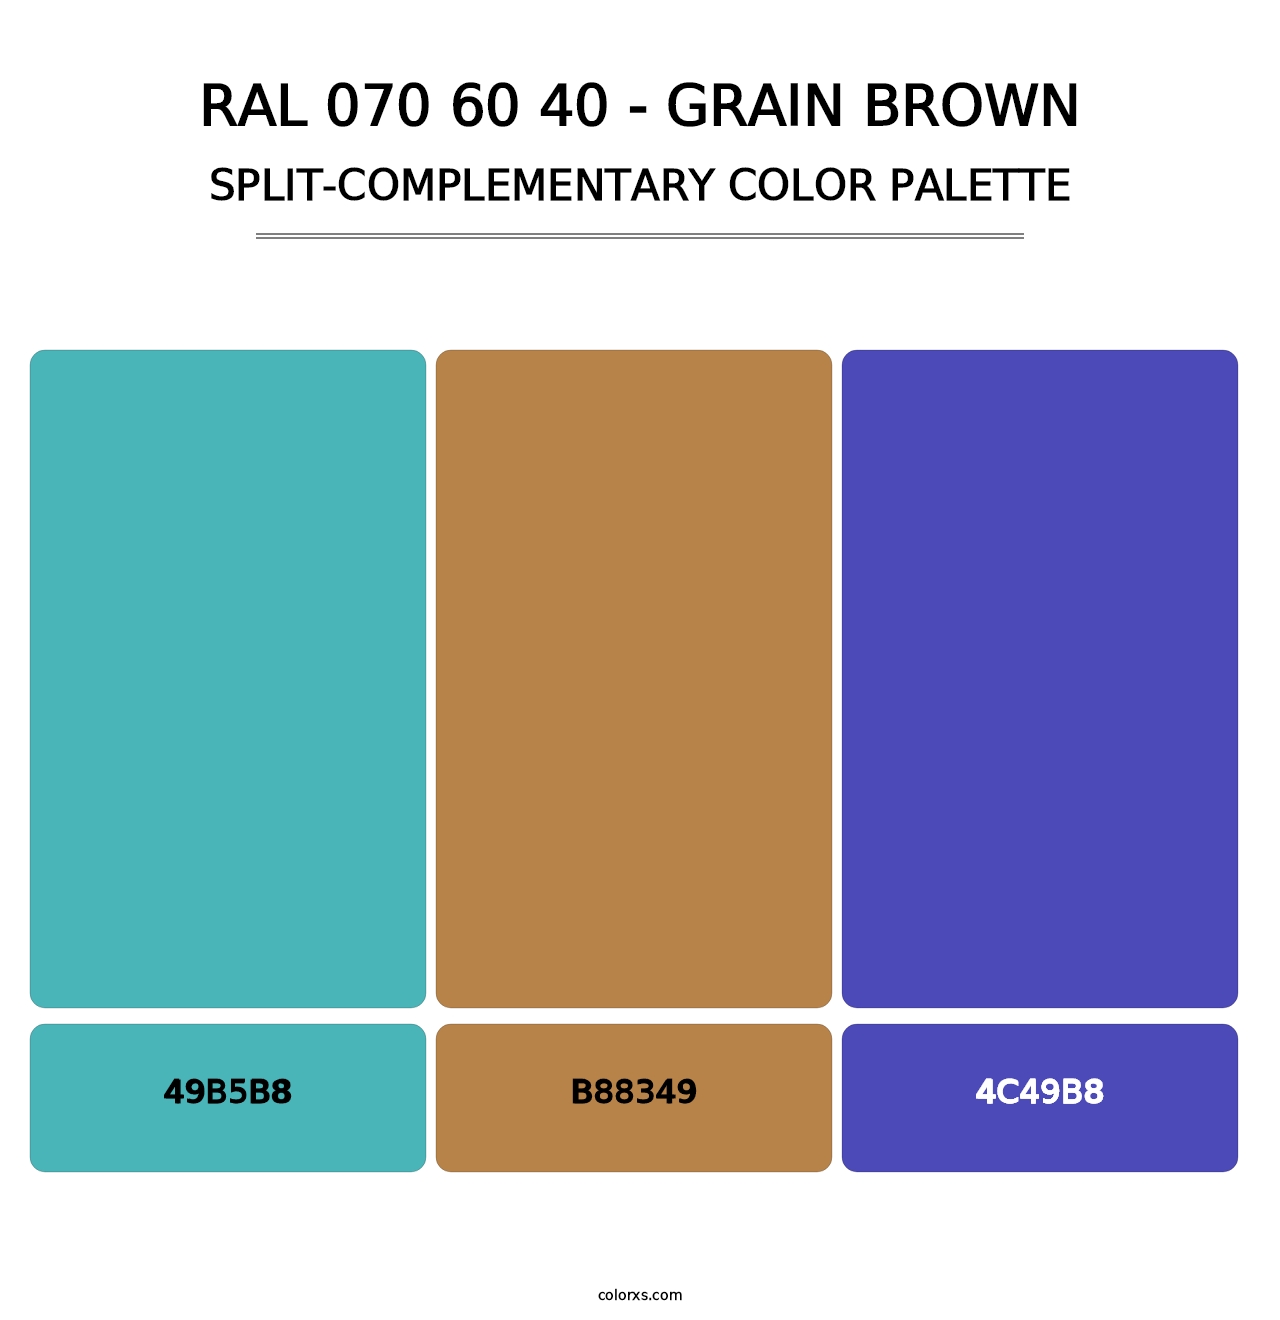 RAL 070 60 40 - Grain Brown - Split-Complementary Color Palette